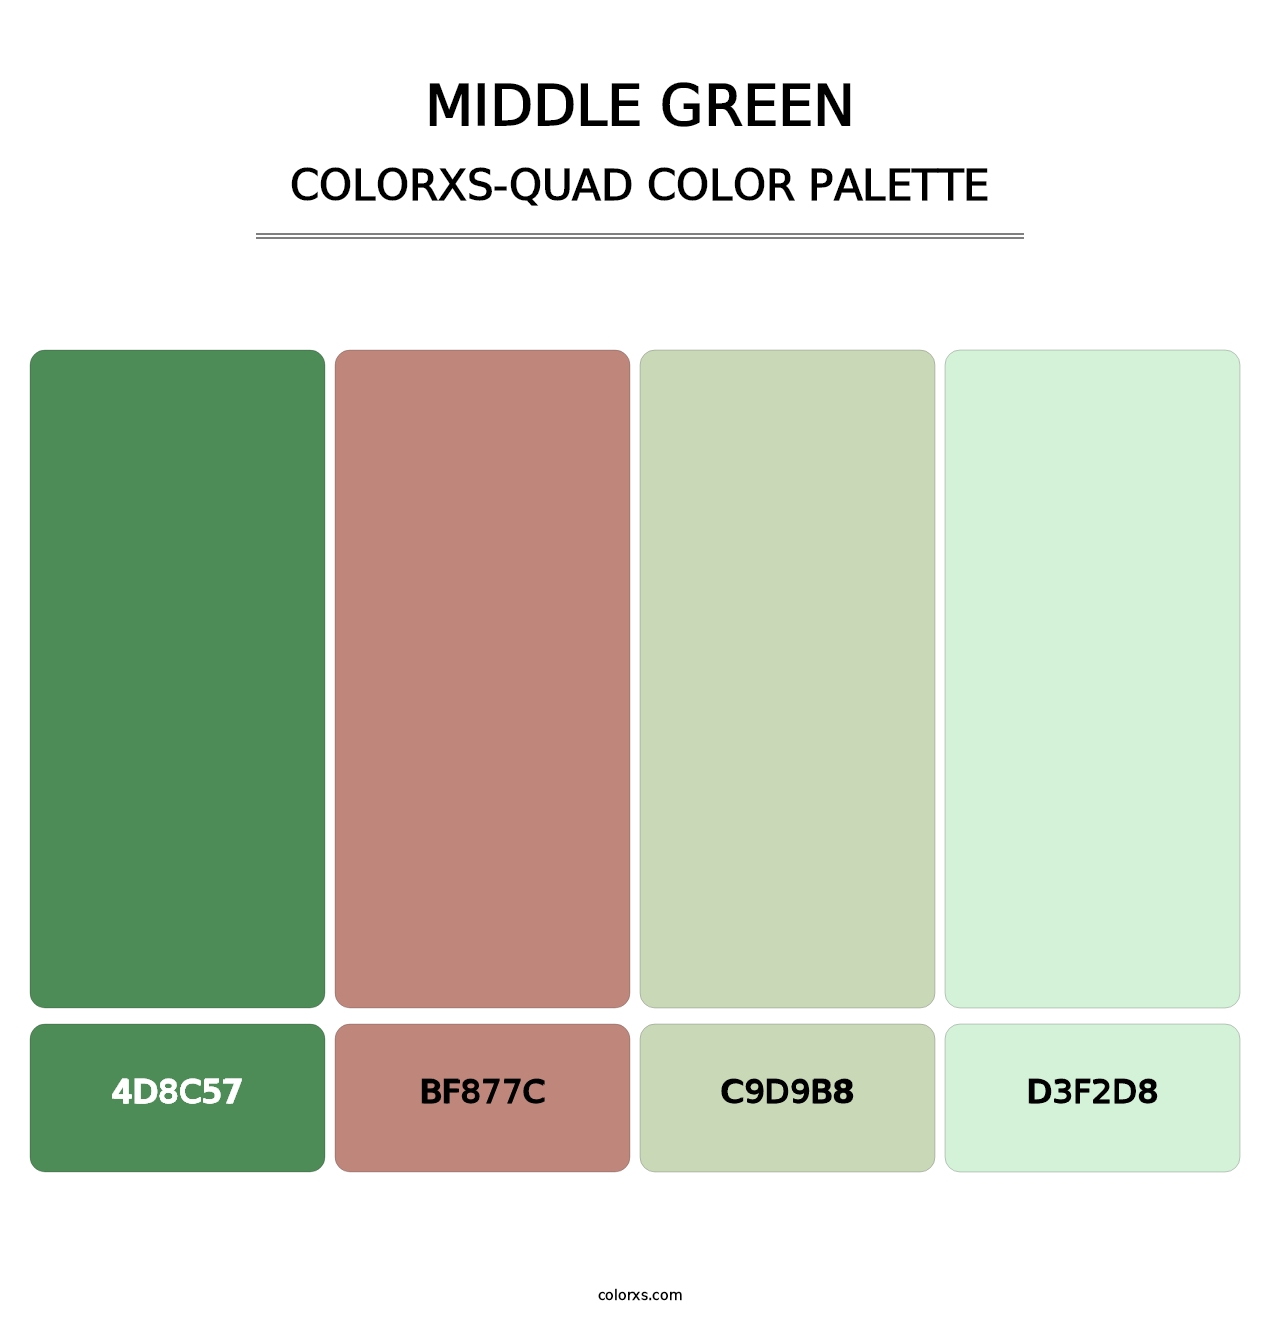 Middle Green - Colorxs Quad Palette